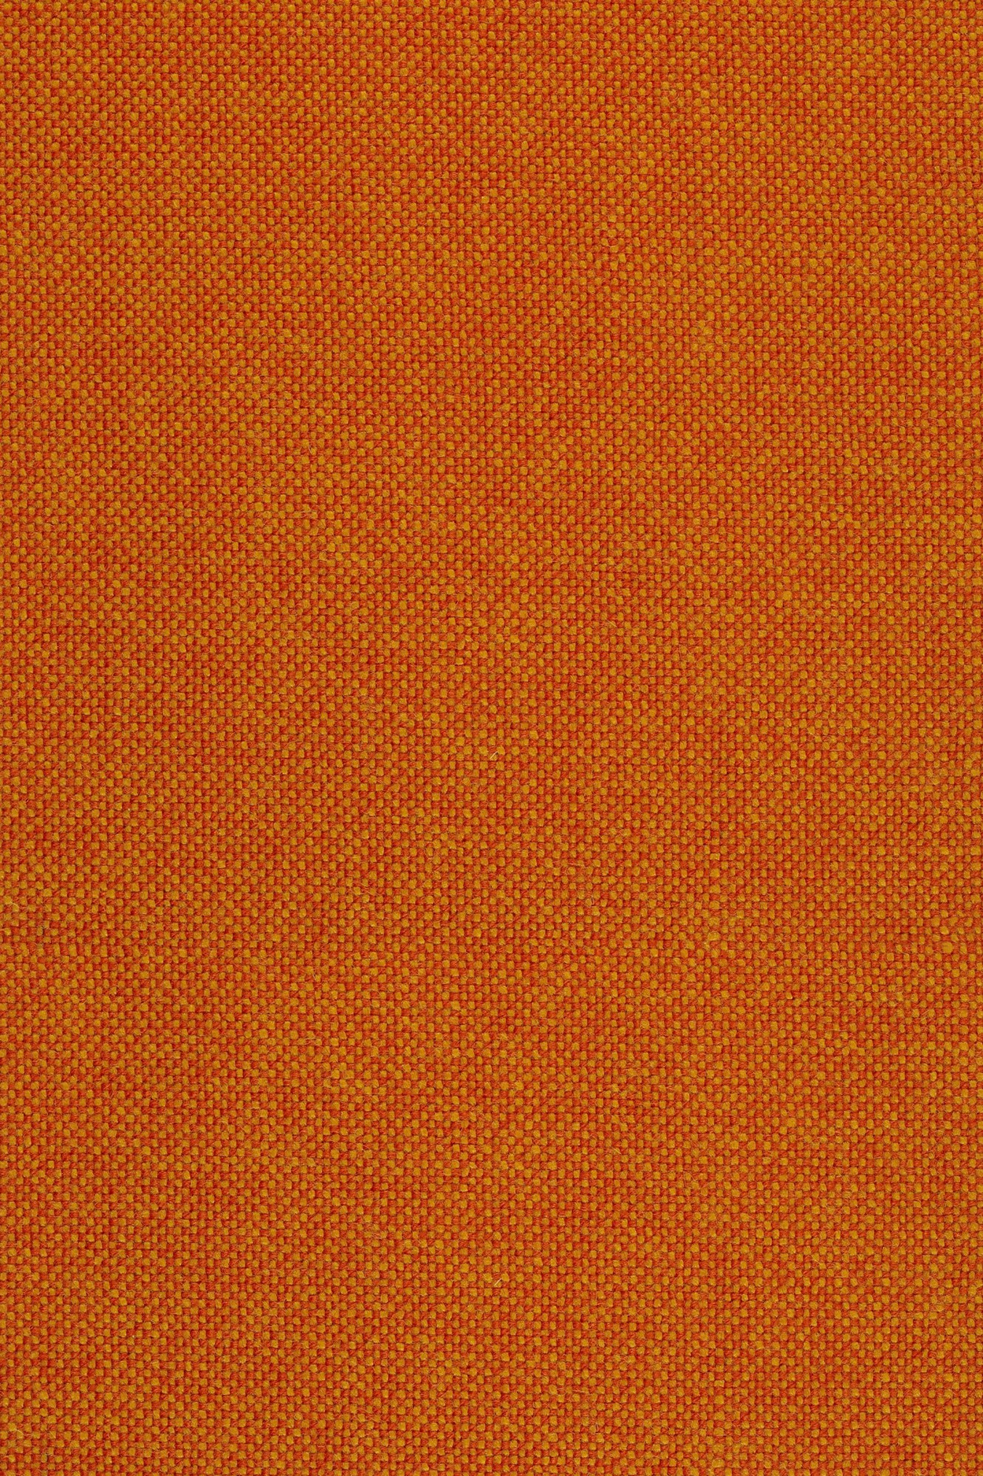 Fabric sample Hallingdal 65 590 orange